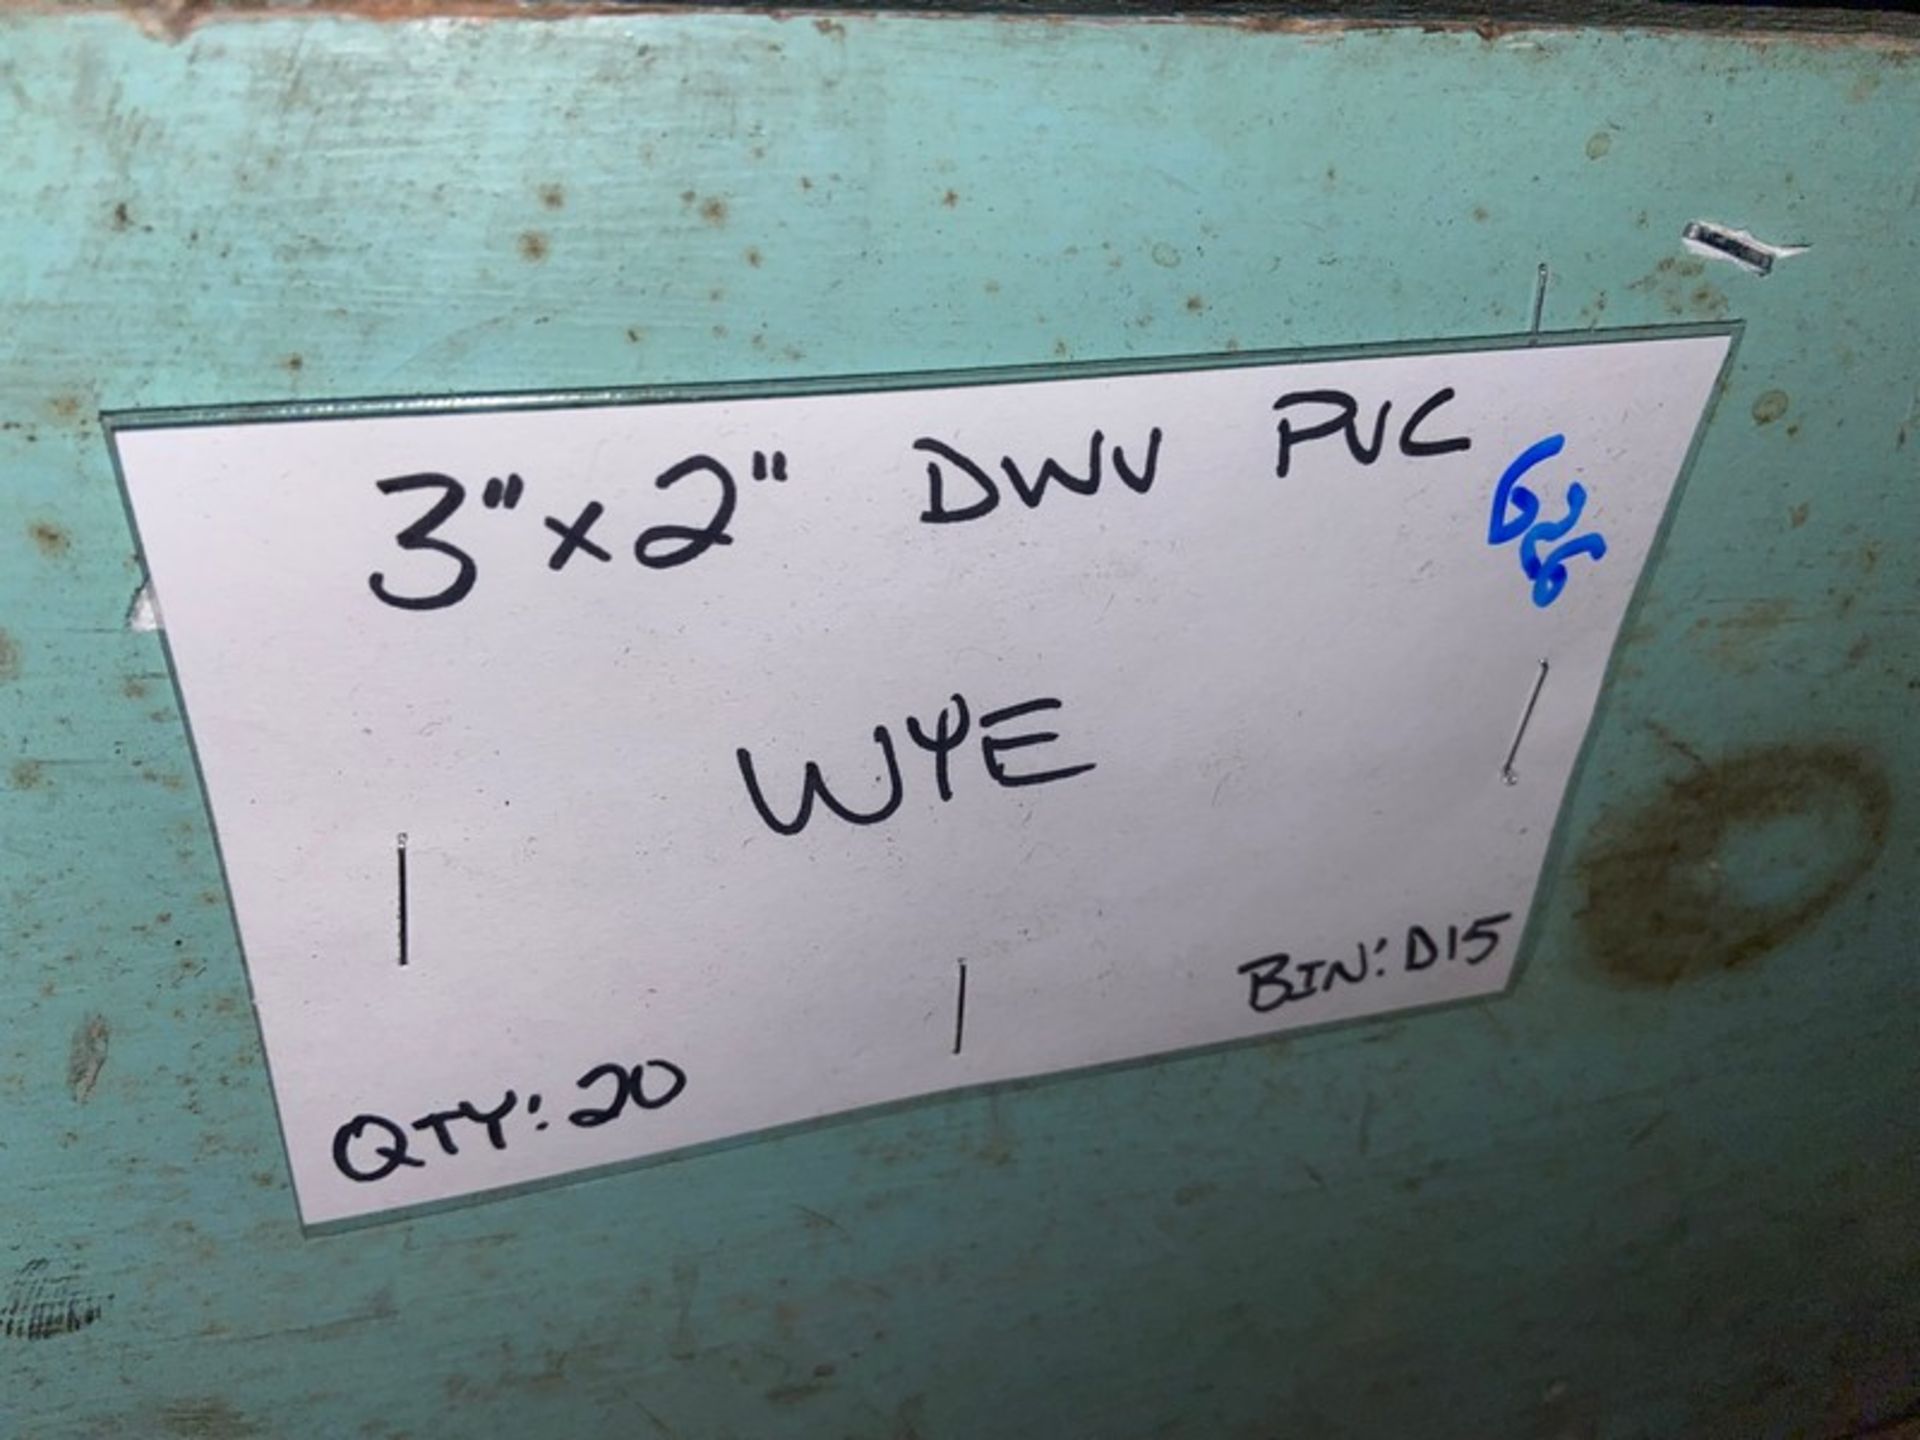 (20) 3”x2” DWV PVC WYE (Bin:D15) (LOCATED IN MONROEVILLE, PA) - Image 4 of 4